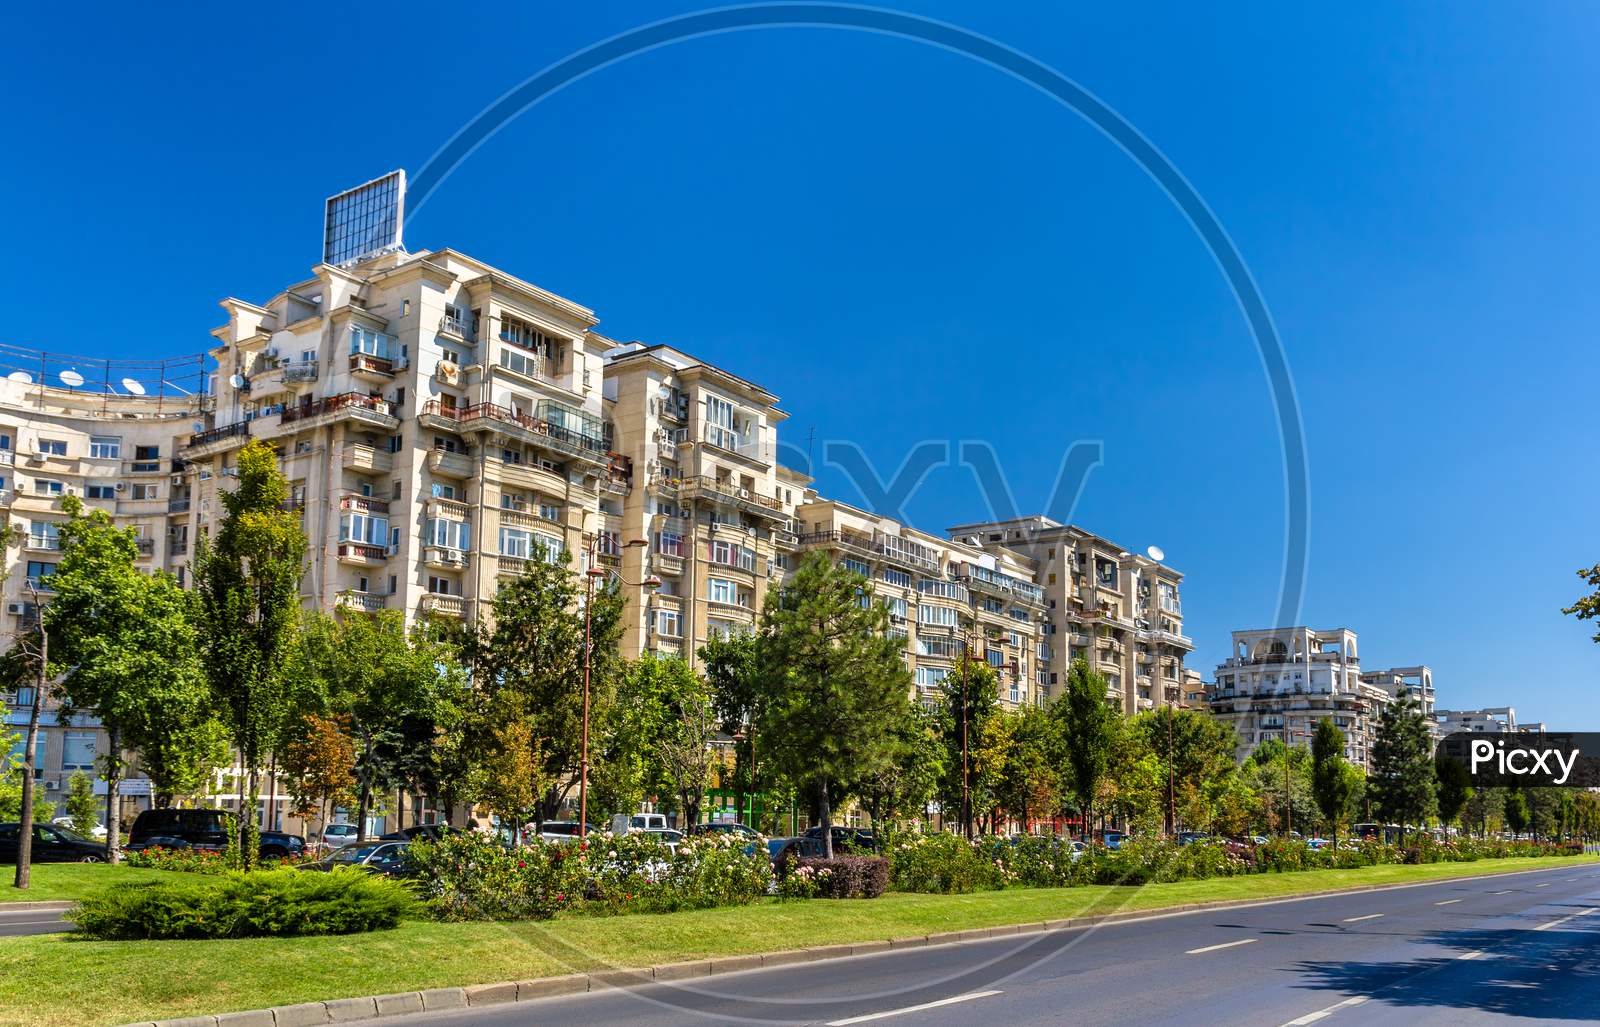 Residential Buildings In Unirii Boulevard - Bucharest, Romania